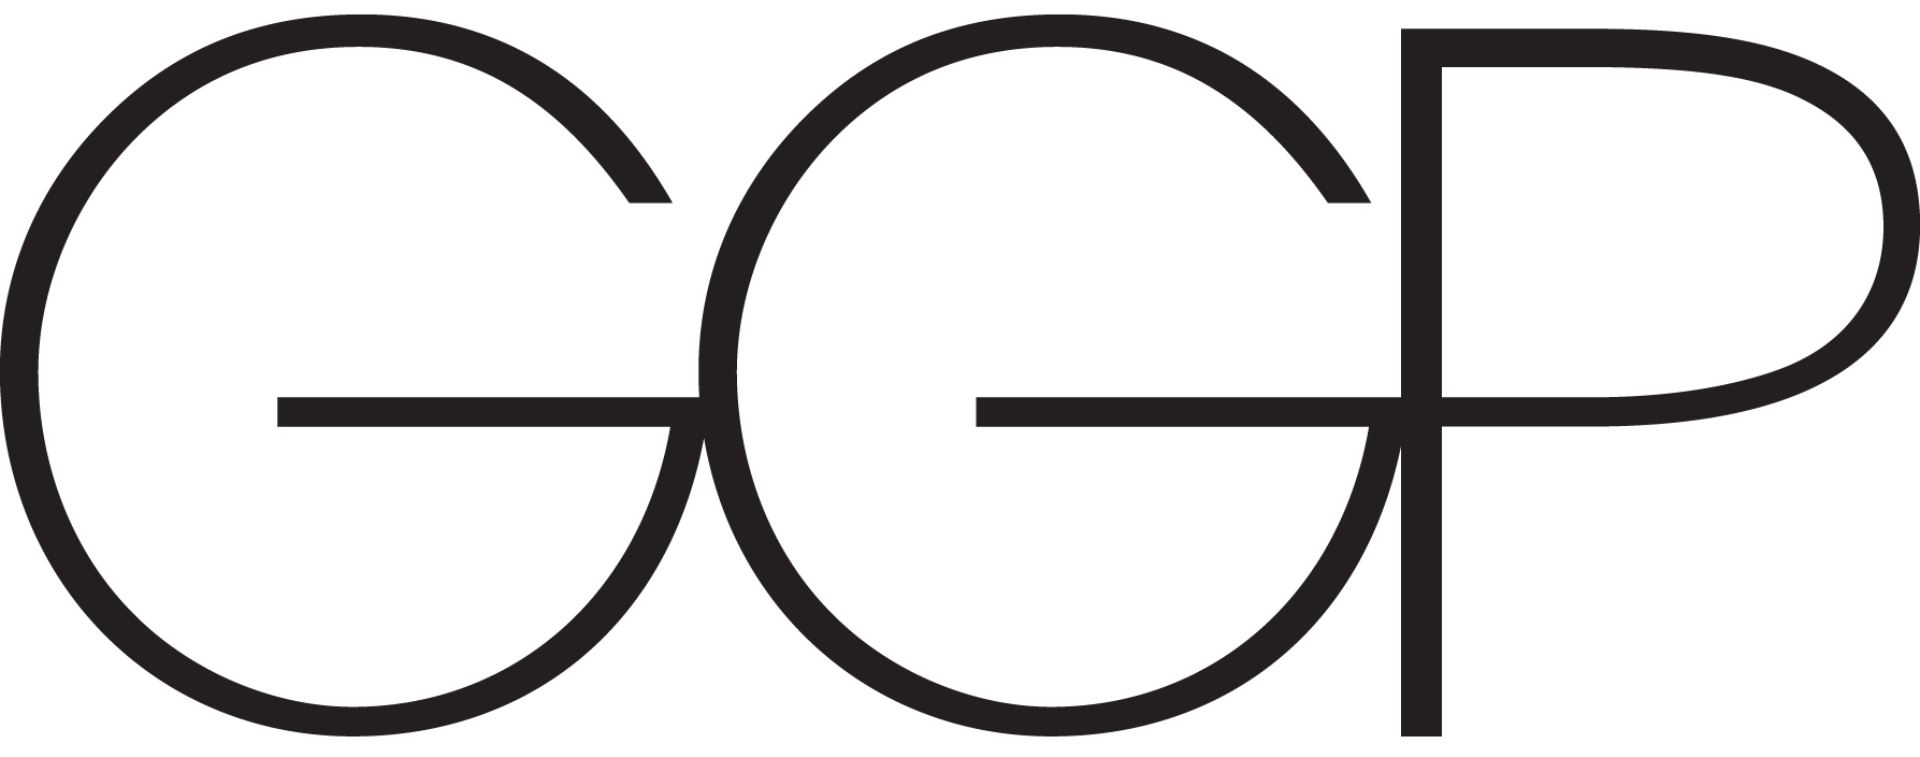 General Growth Properties, Inc. Company Logo